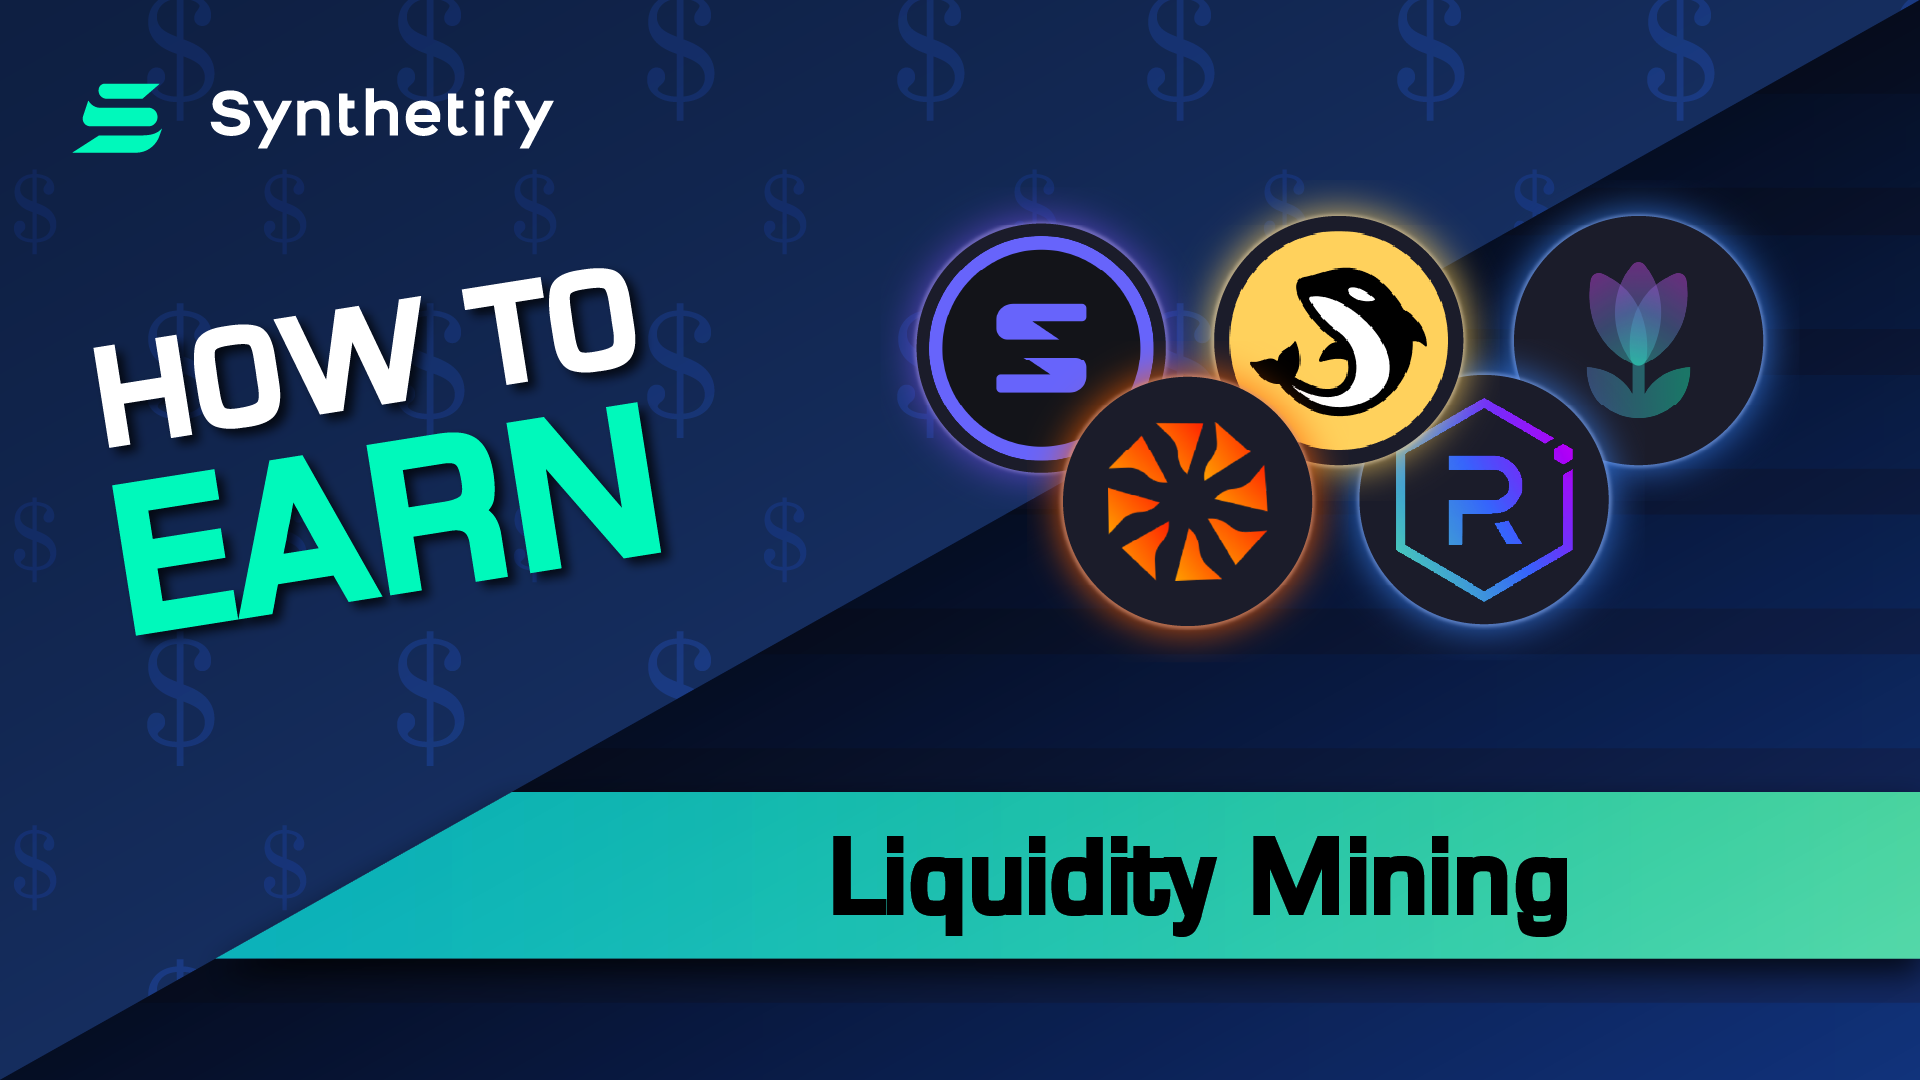 Liquidity mining